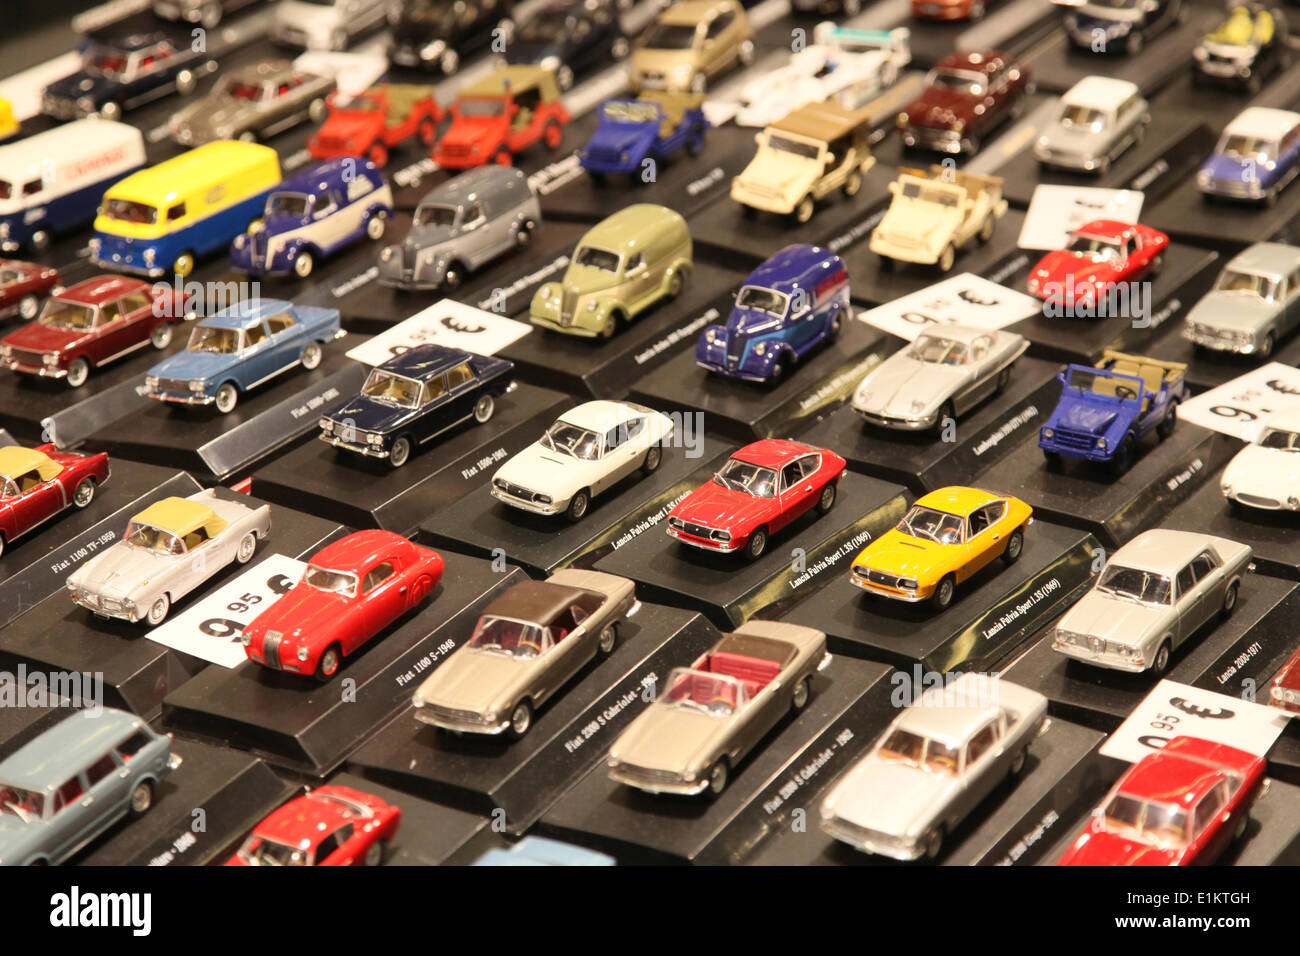 Miniature cars -Fotos und -Bildmaterial in hoher Auflösung – Alamy